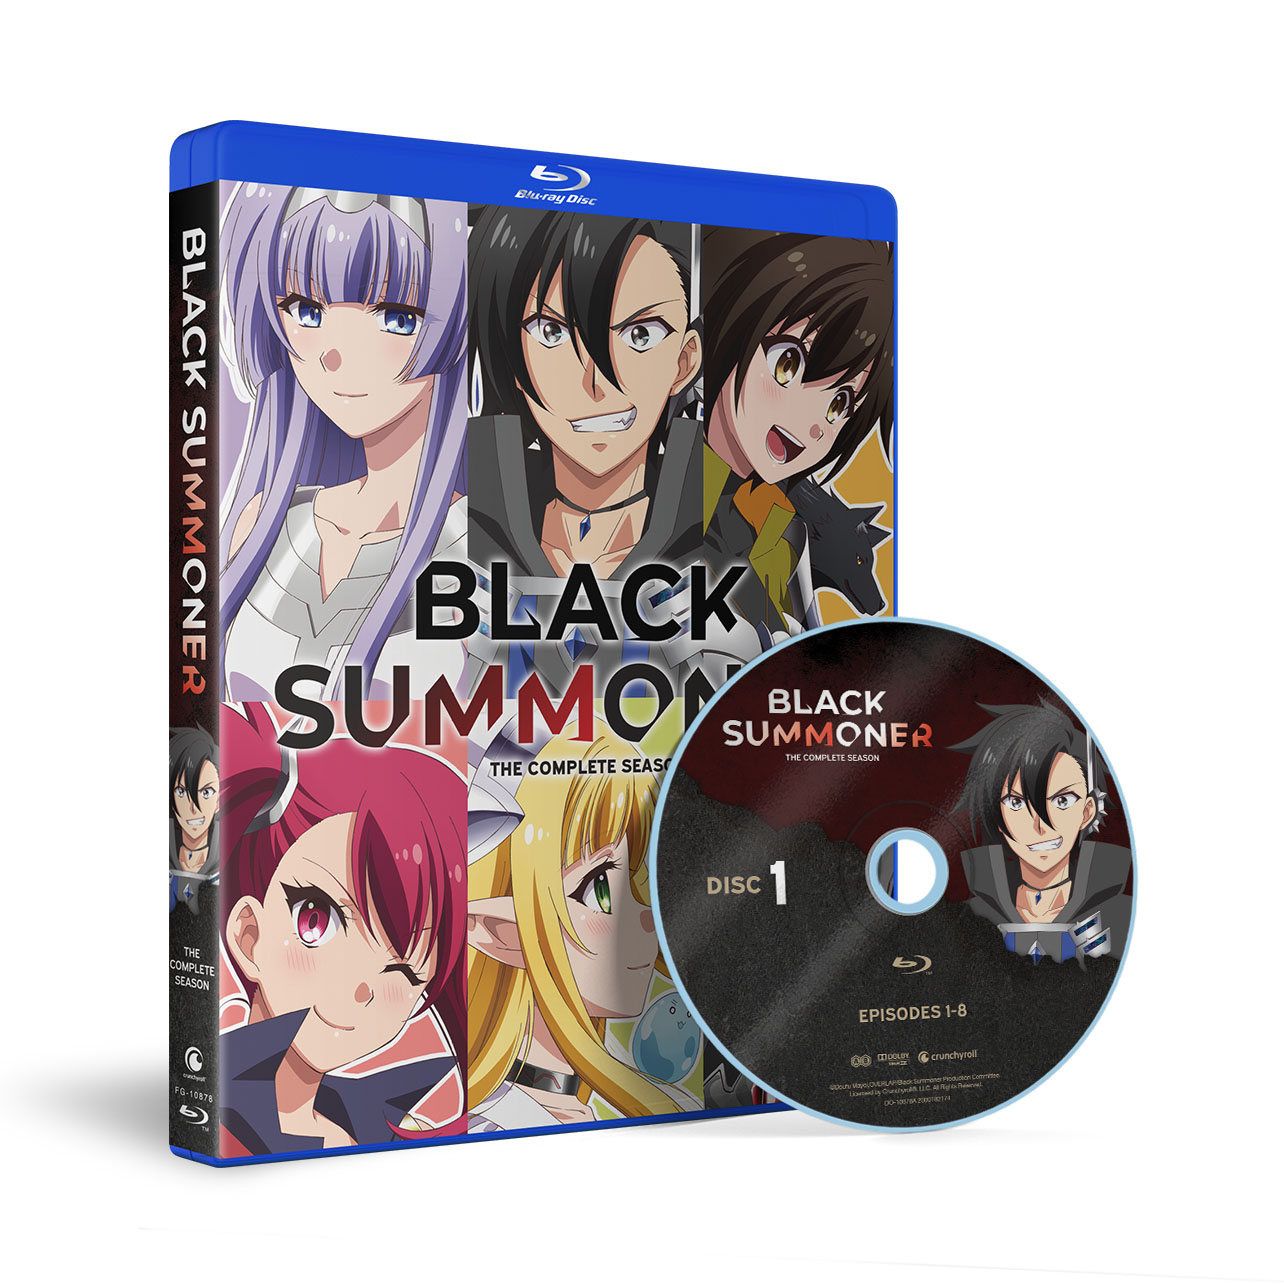 Black Summoner - The Complete Season - Blu-ray image count 1